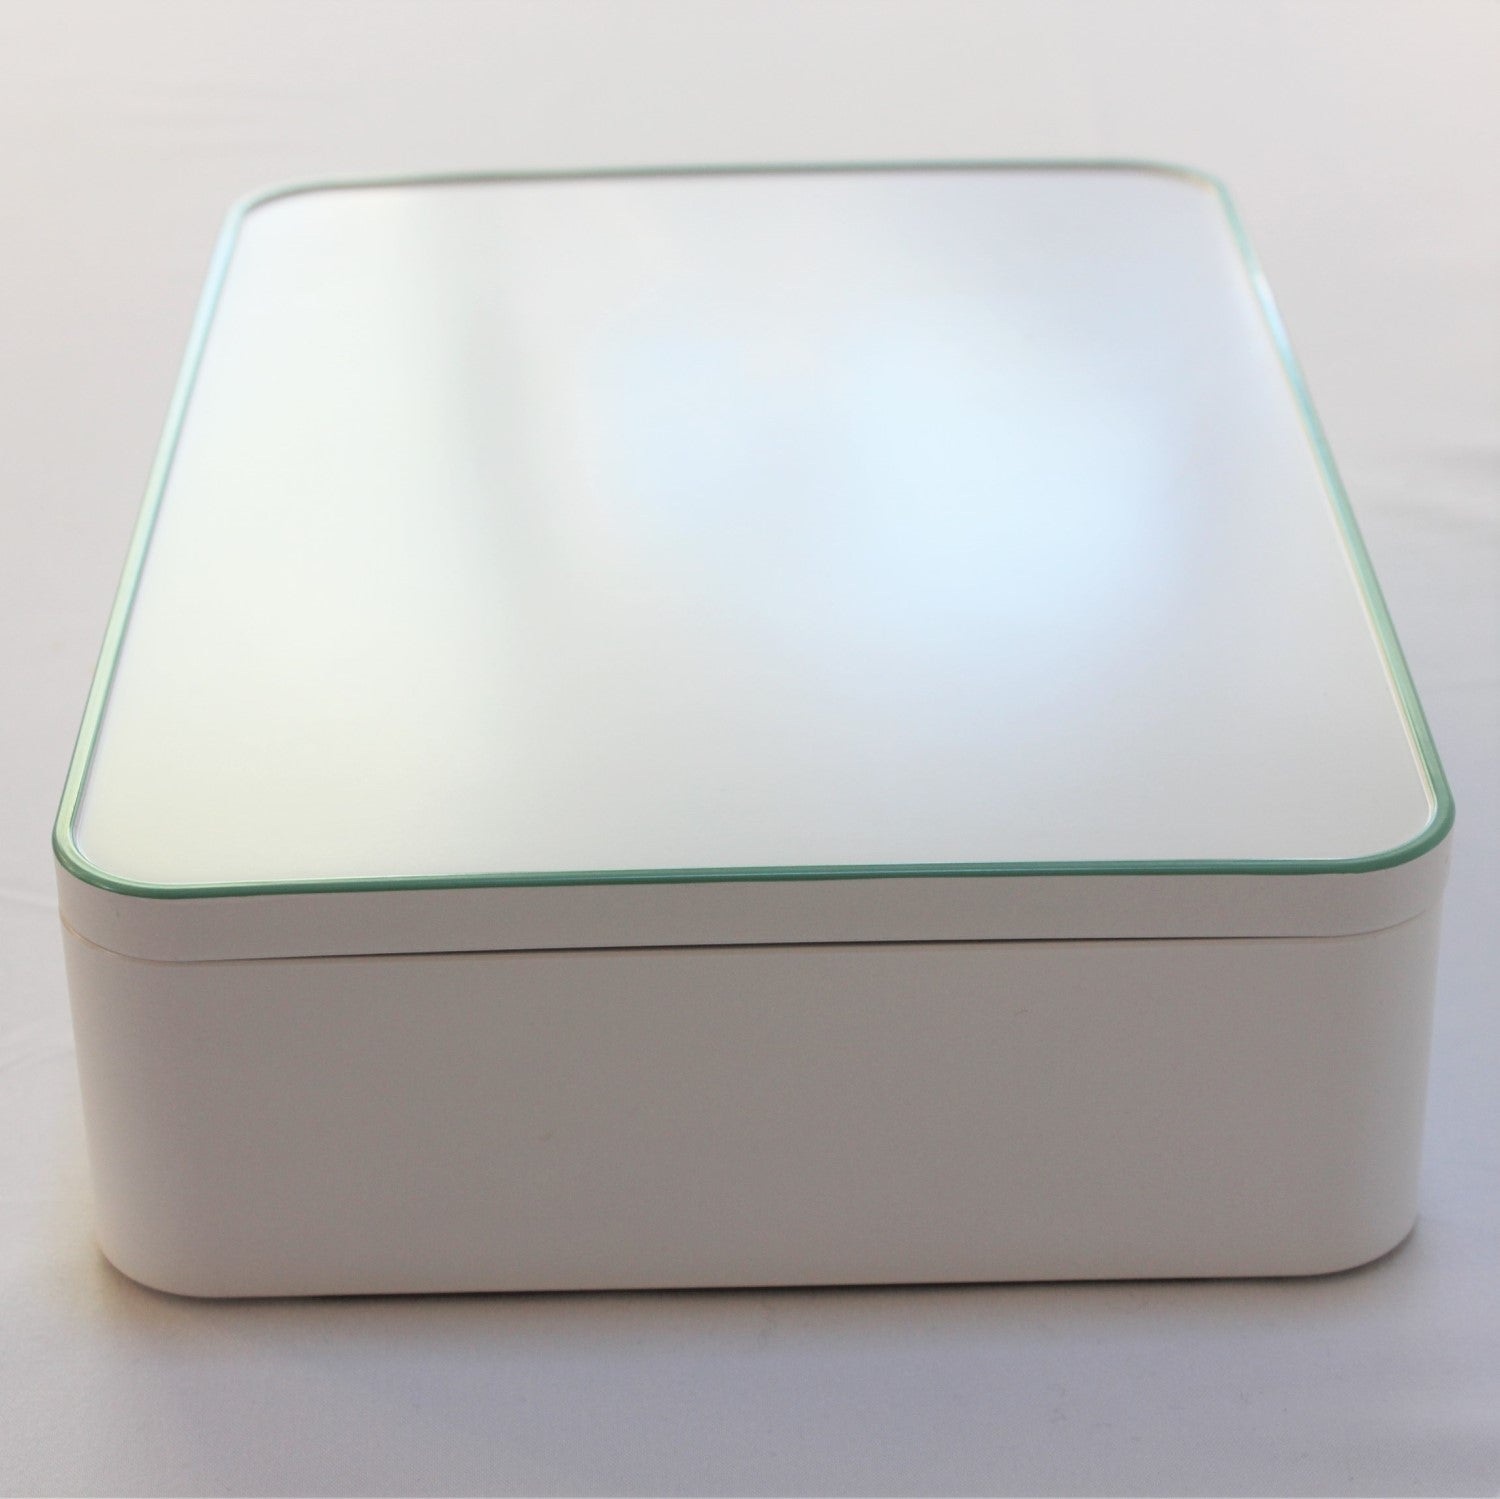 Majime Life Wakaba 1 tier picnic bento box from Japan Japanese bento boxes for adults sleek and modern design